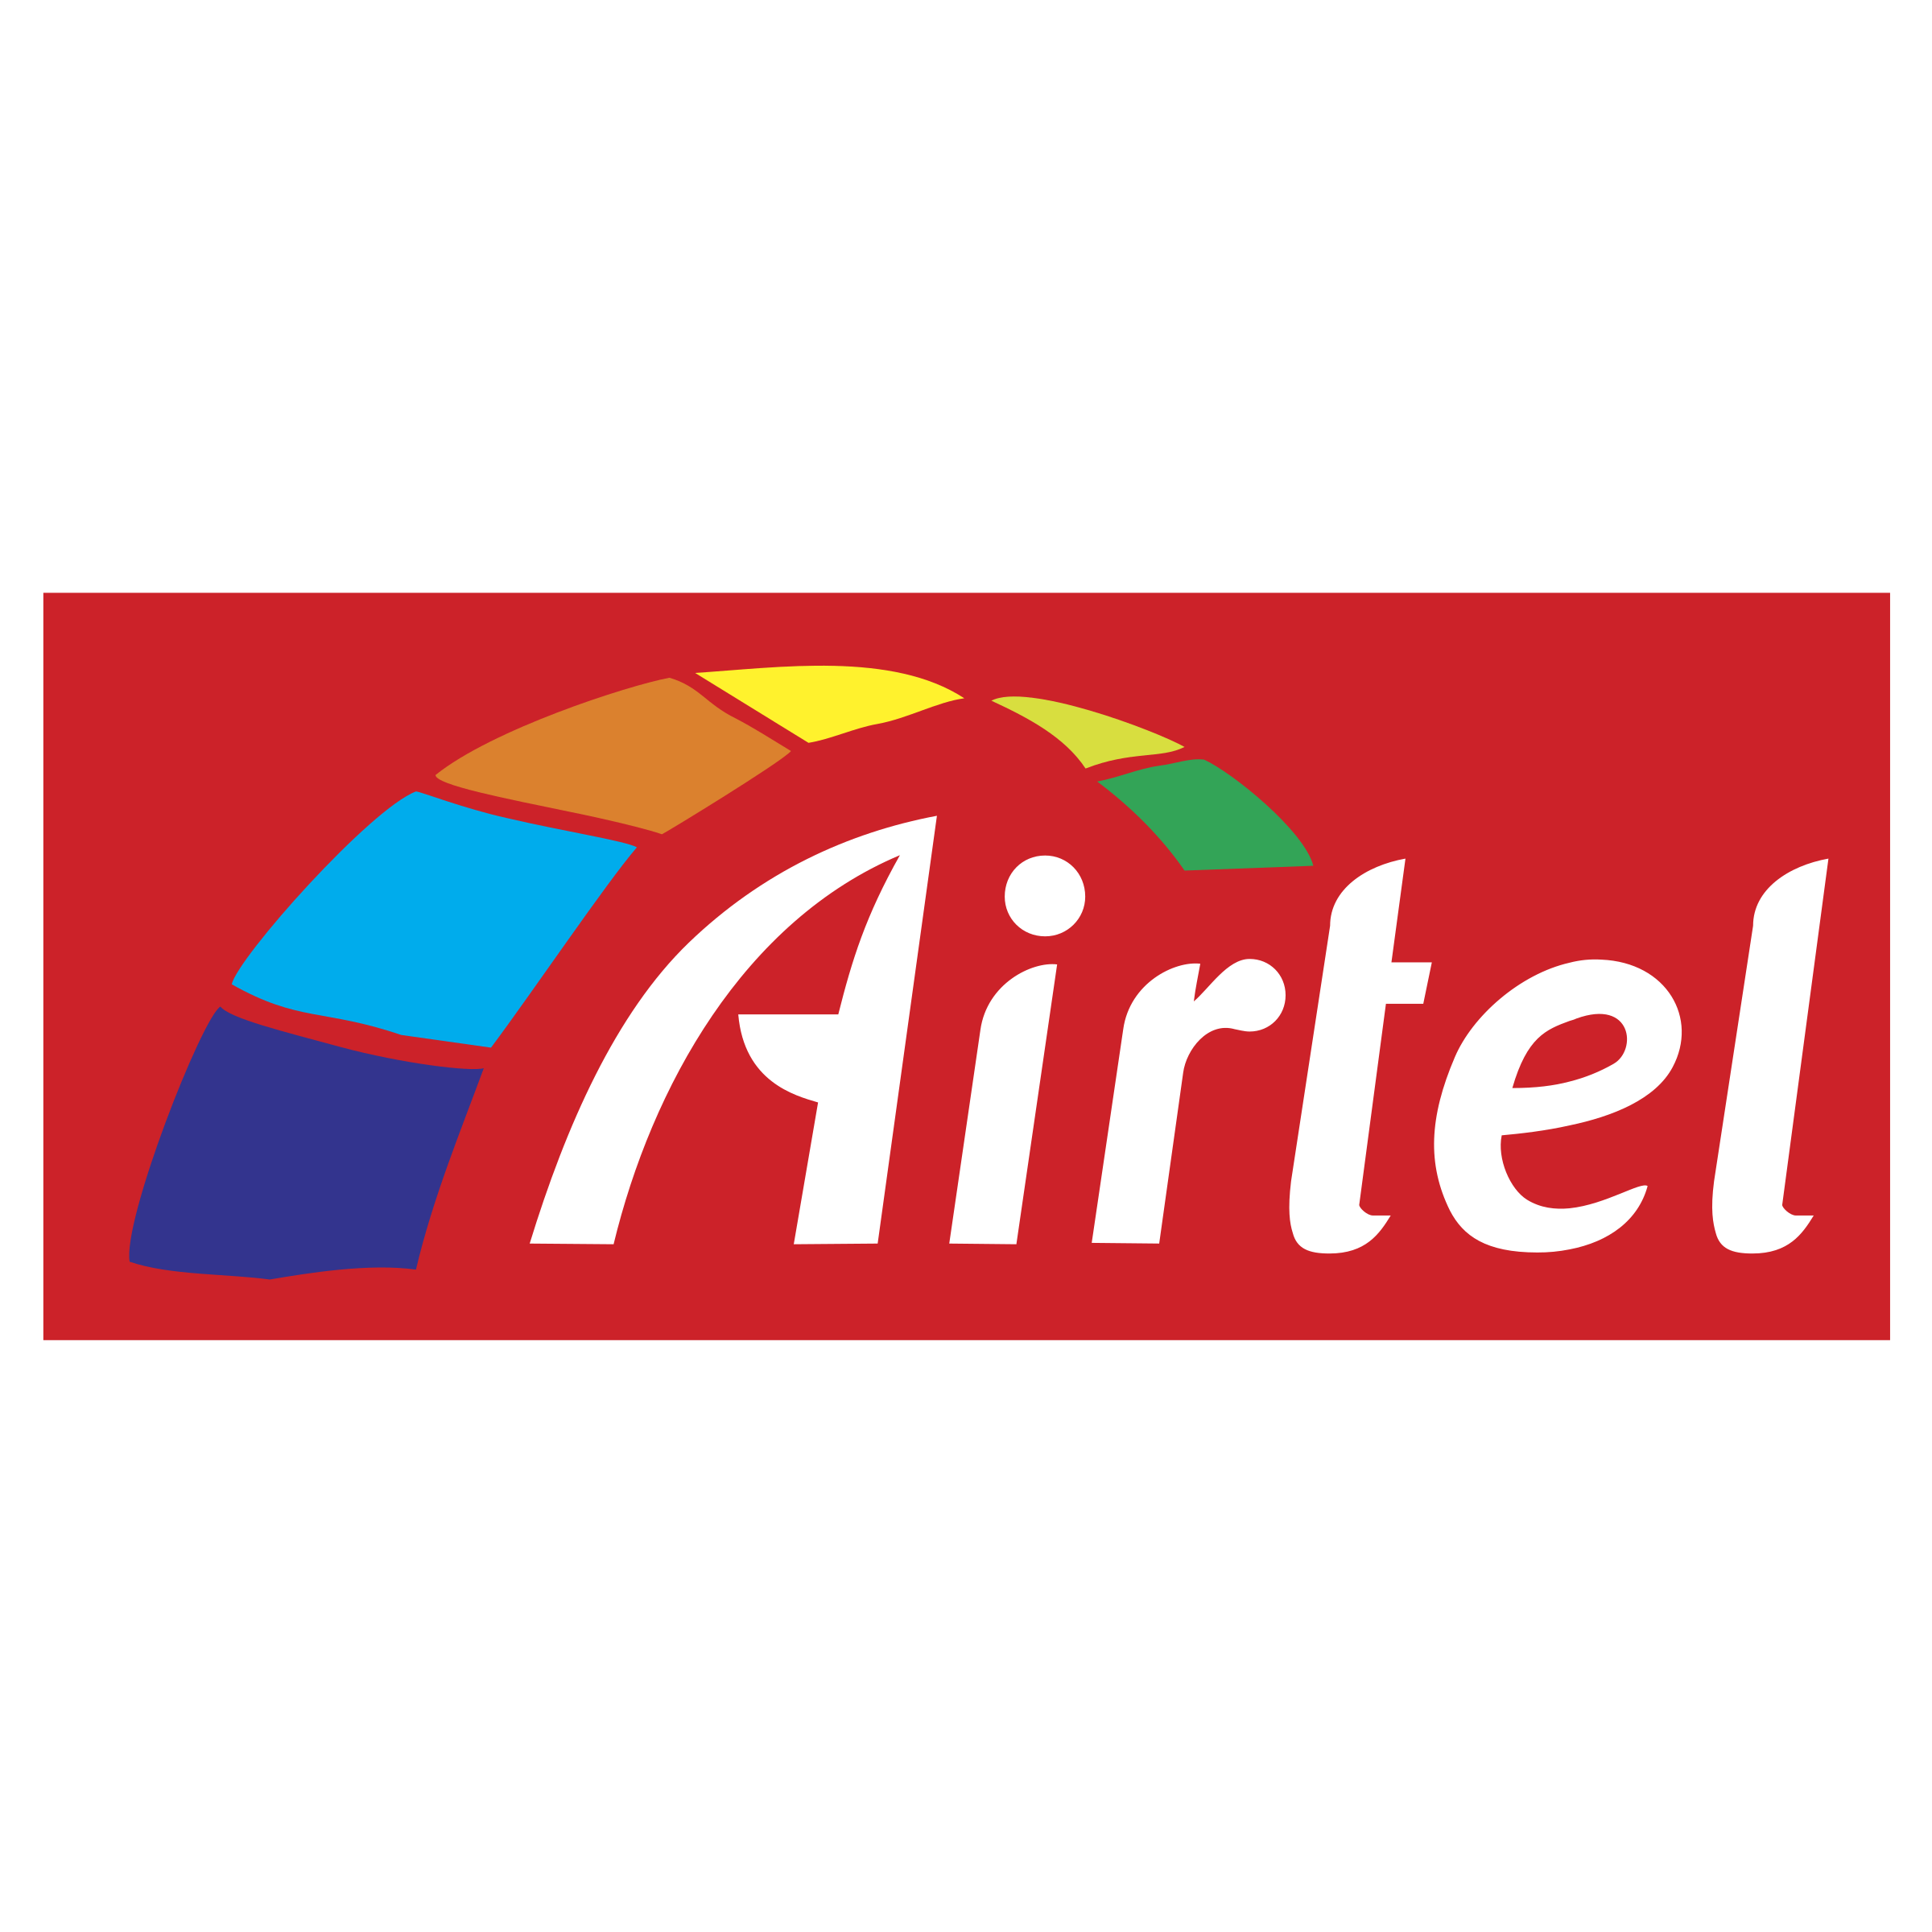 Artil Logo - Airtel Logo PNG Transparent & SVG Vector - Freebie Supply